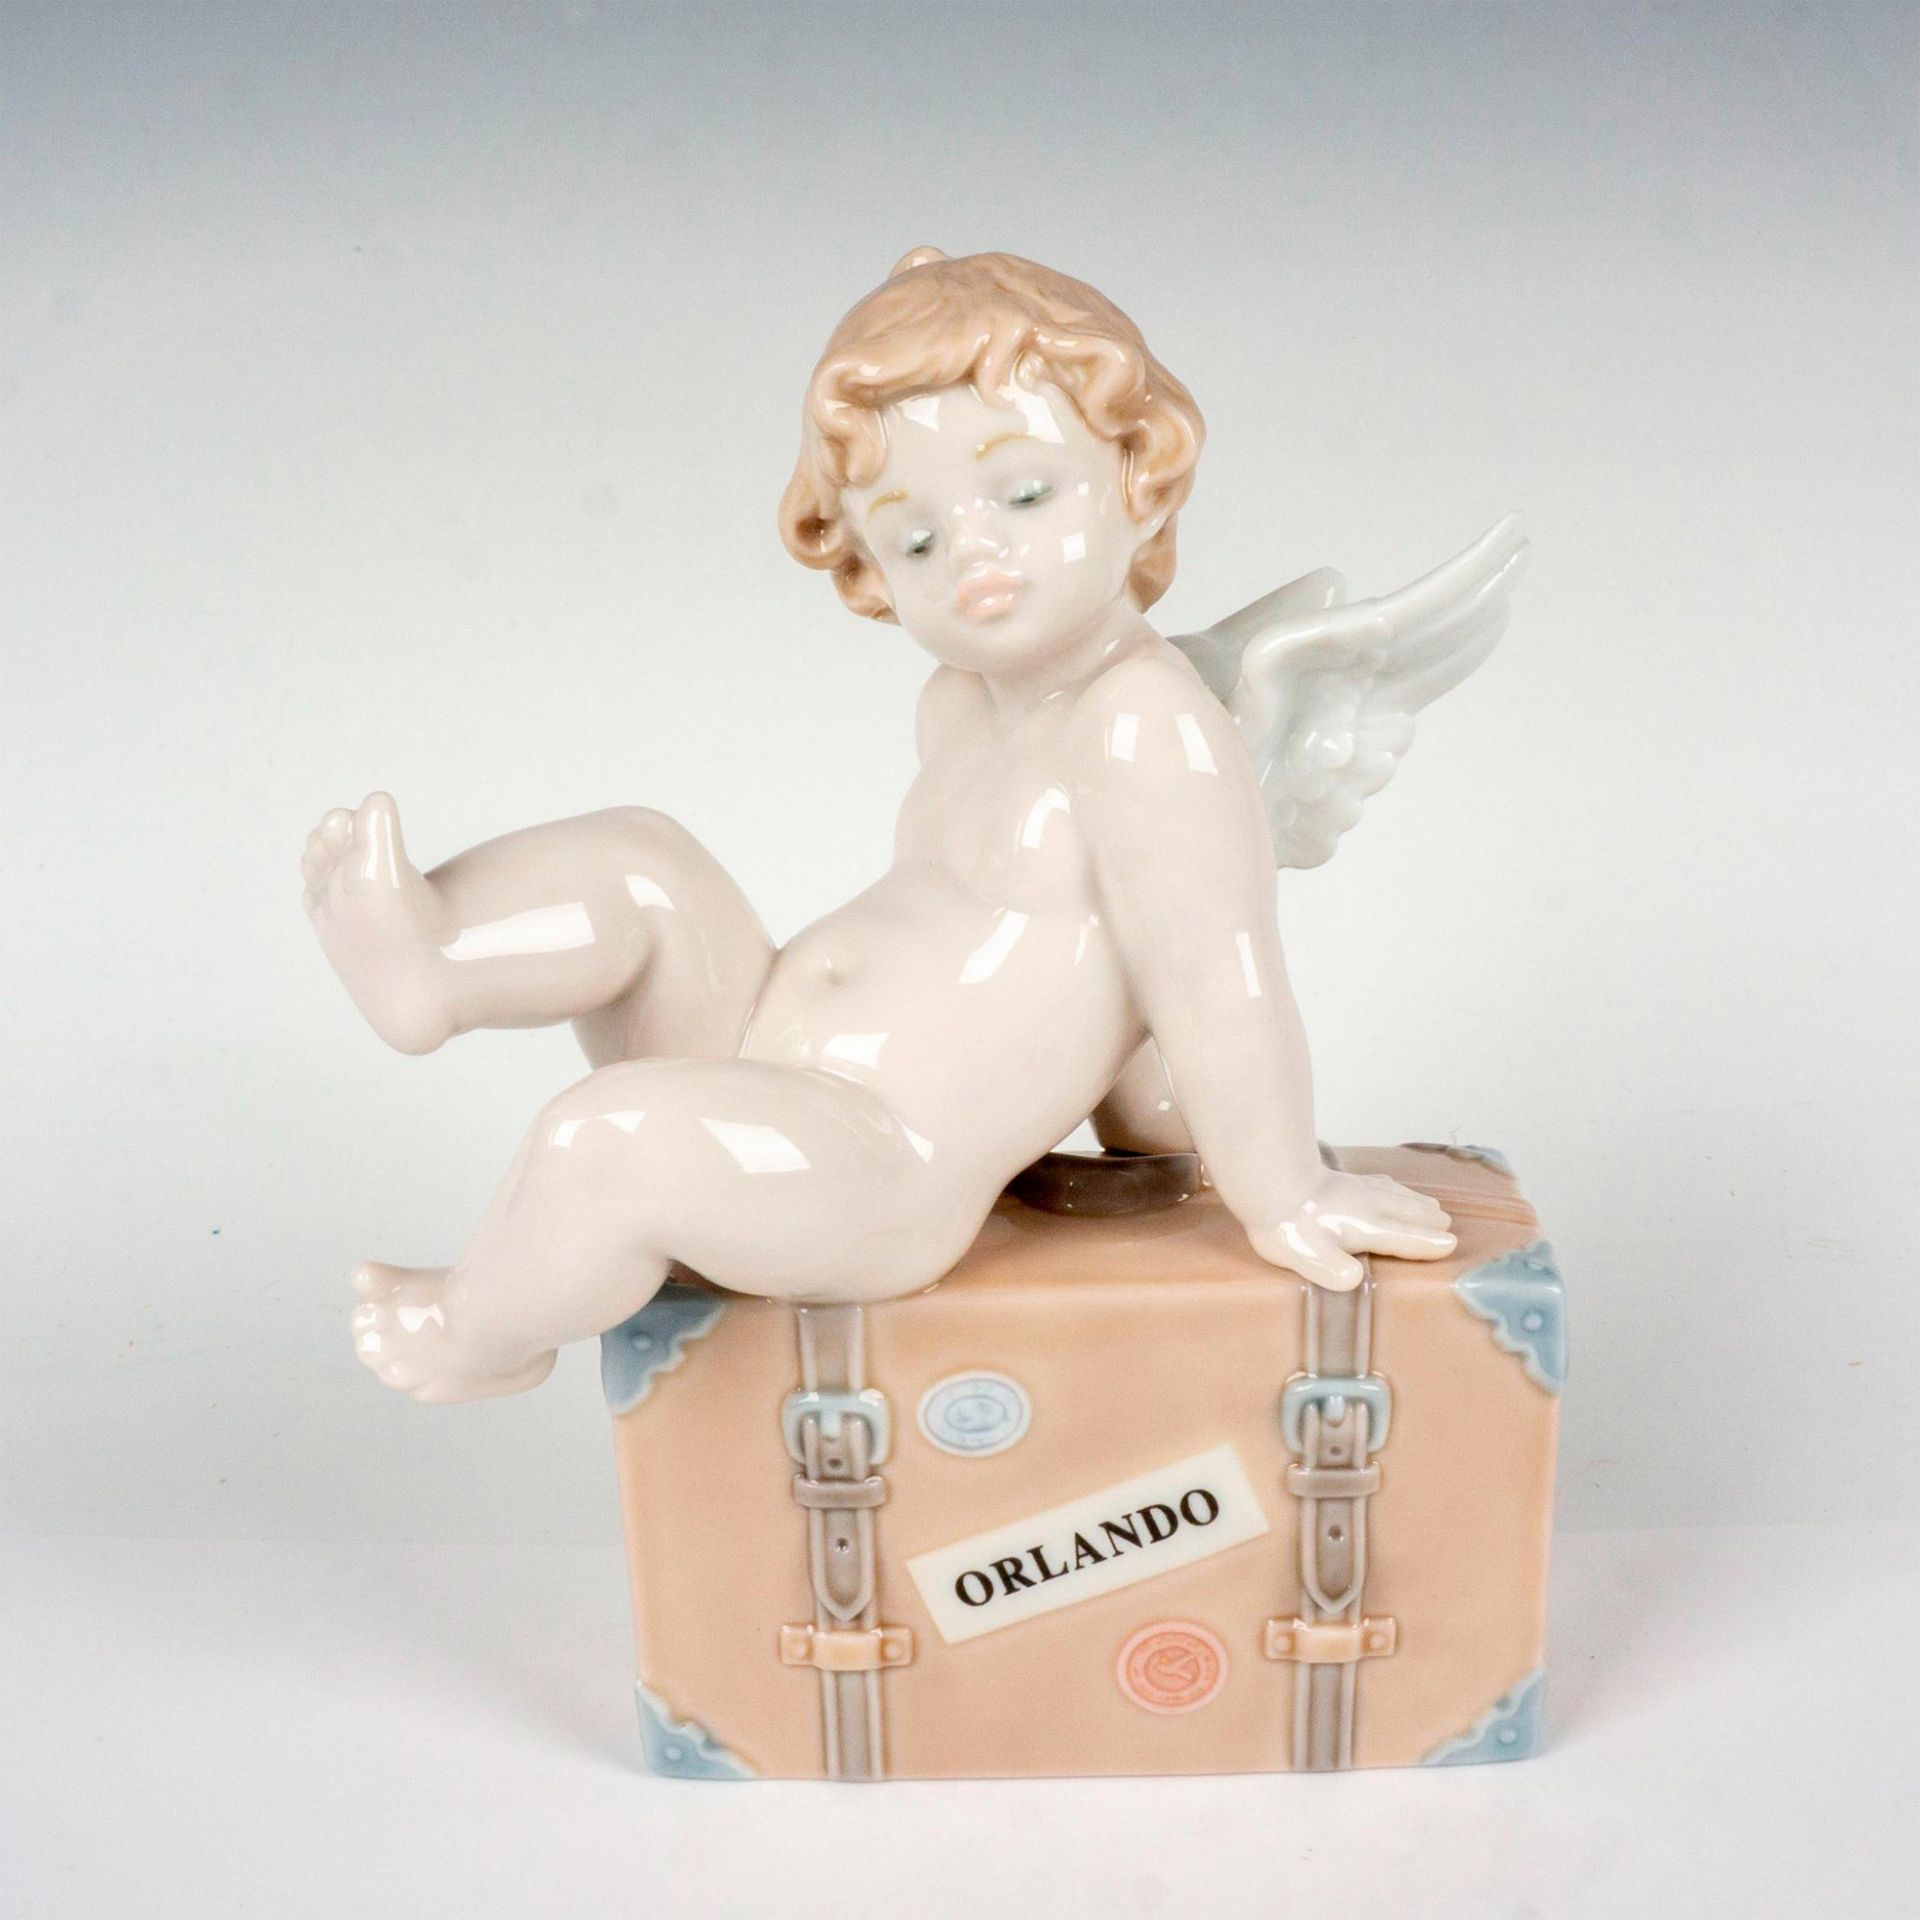 Travel The World Of Lladro (Orlando) 1007314 - Lladro Porcelain Figurine